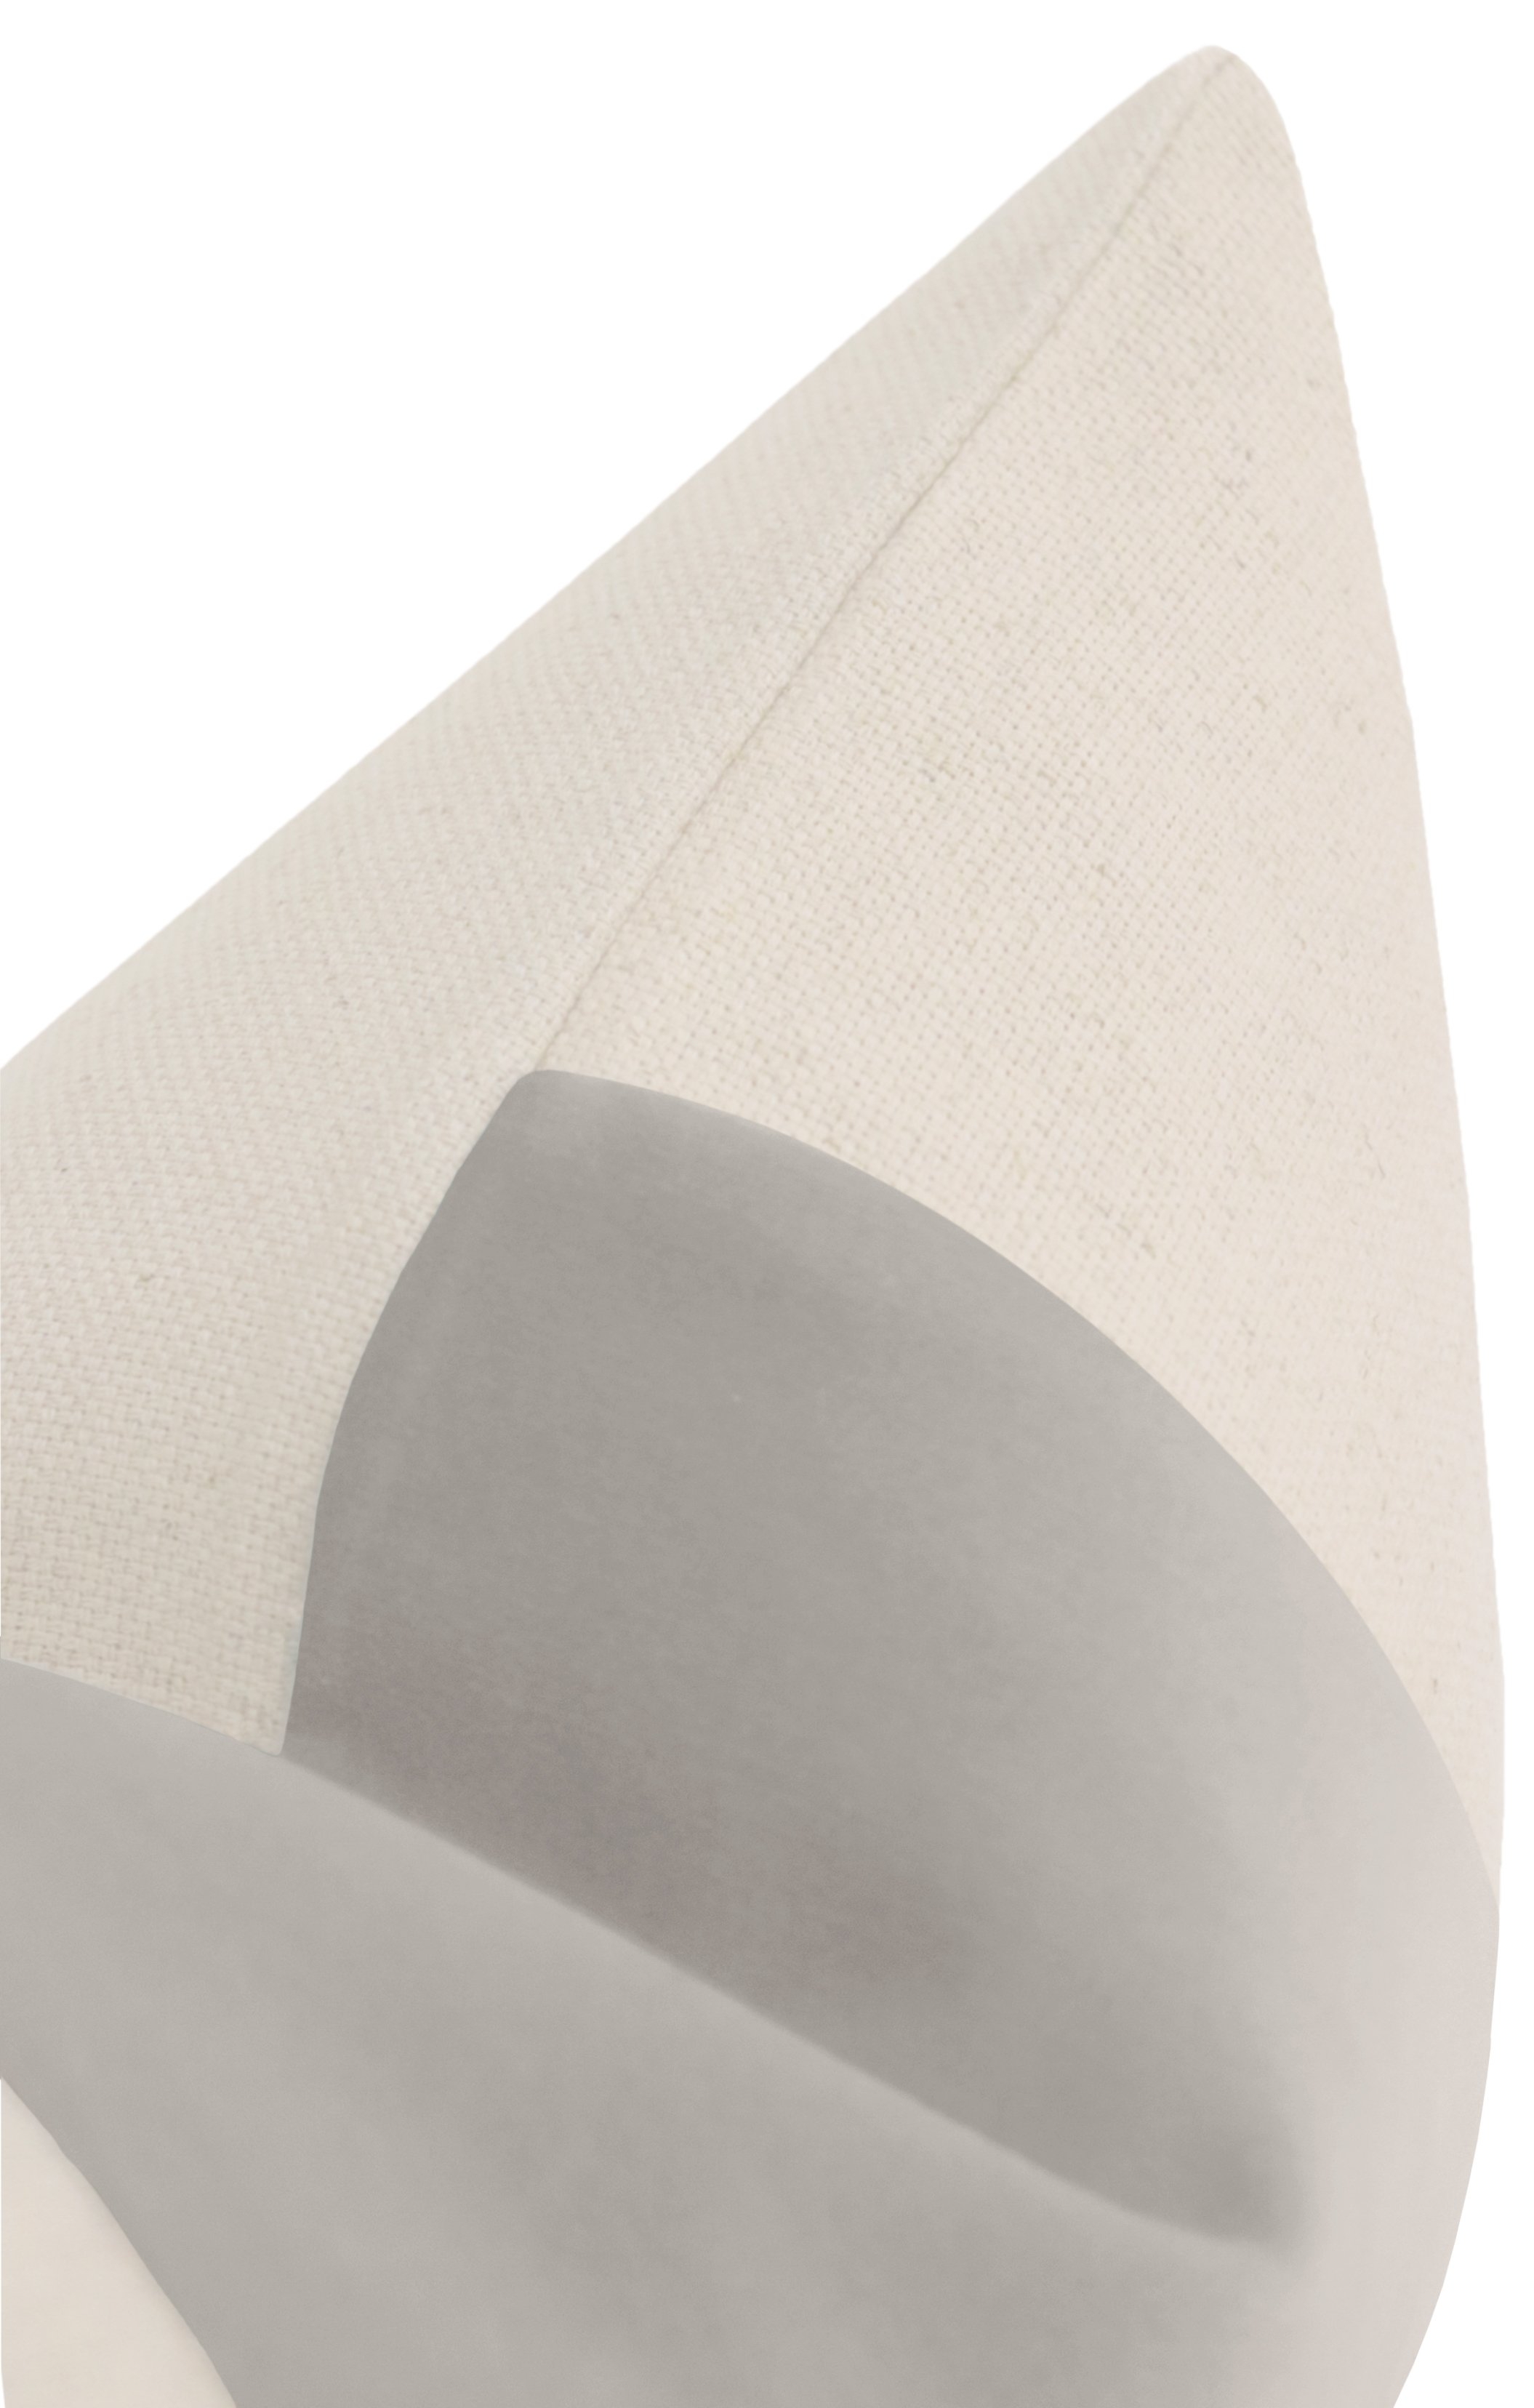 The Little Lumbar Panel Signature Velvet Pillow Cover, Dove Gray, 18" x 12" - Image 2